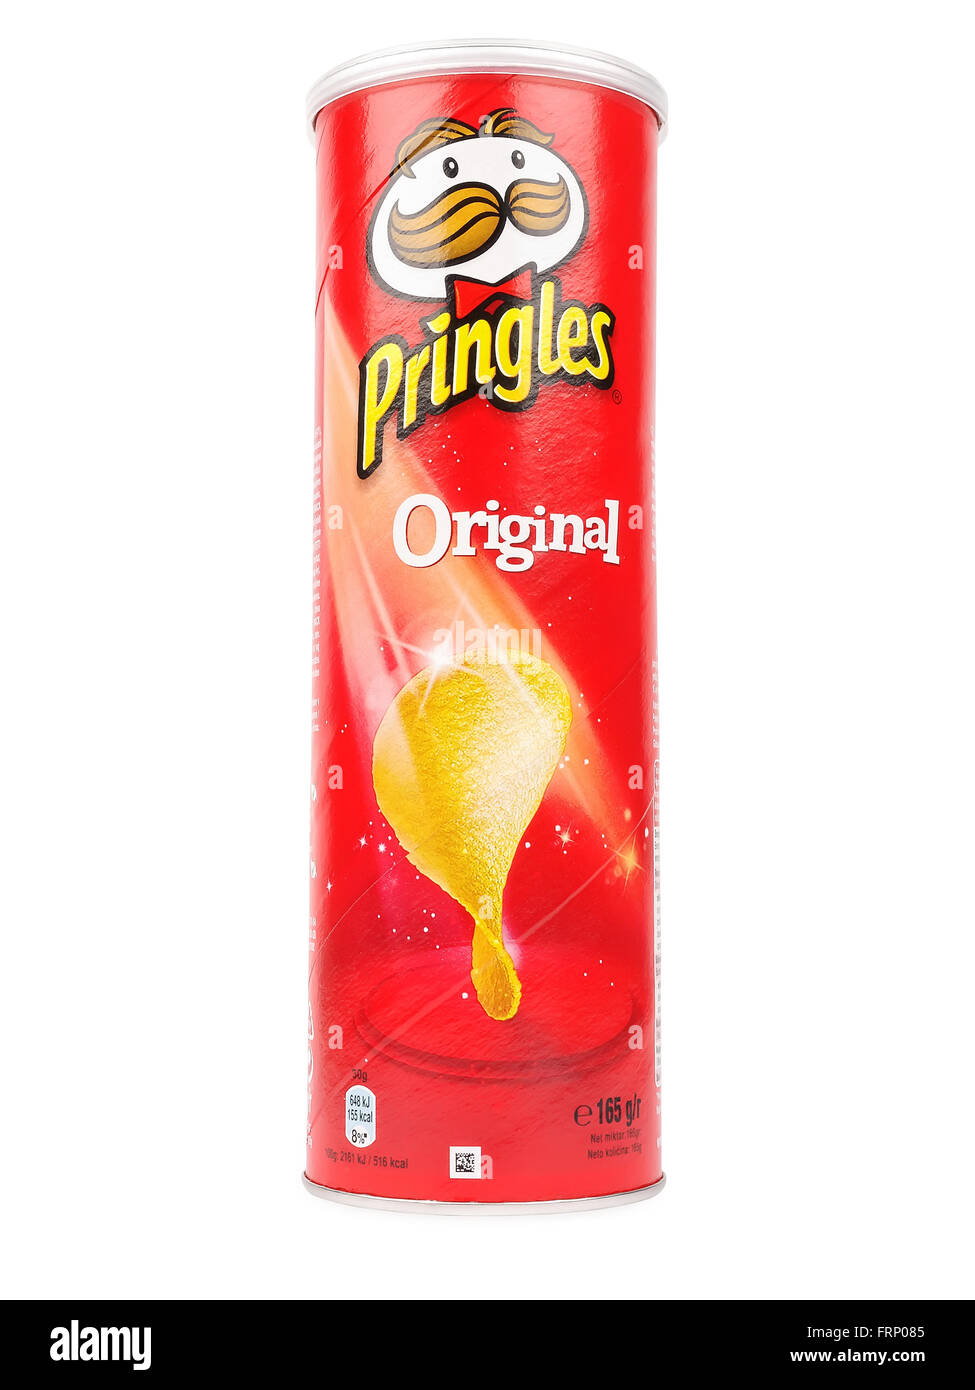 Pringles Original potato chips, package of 165 grams. Pringles is a brand of potato snack chips. Stock Photo